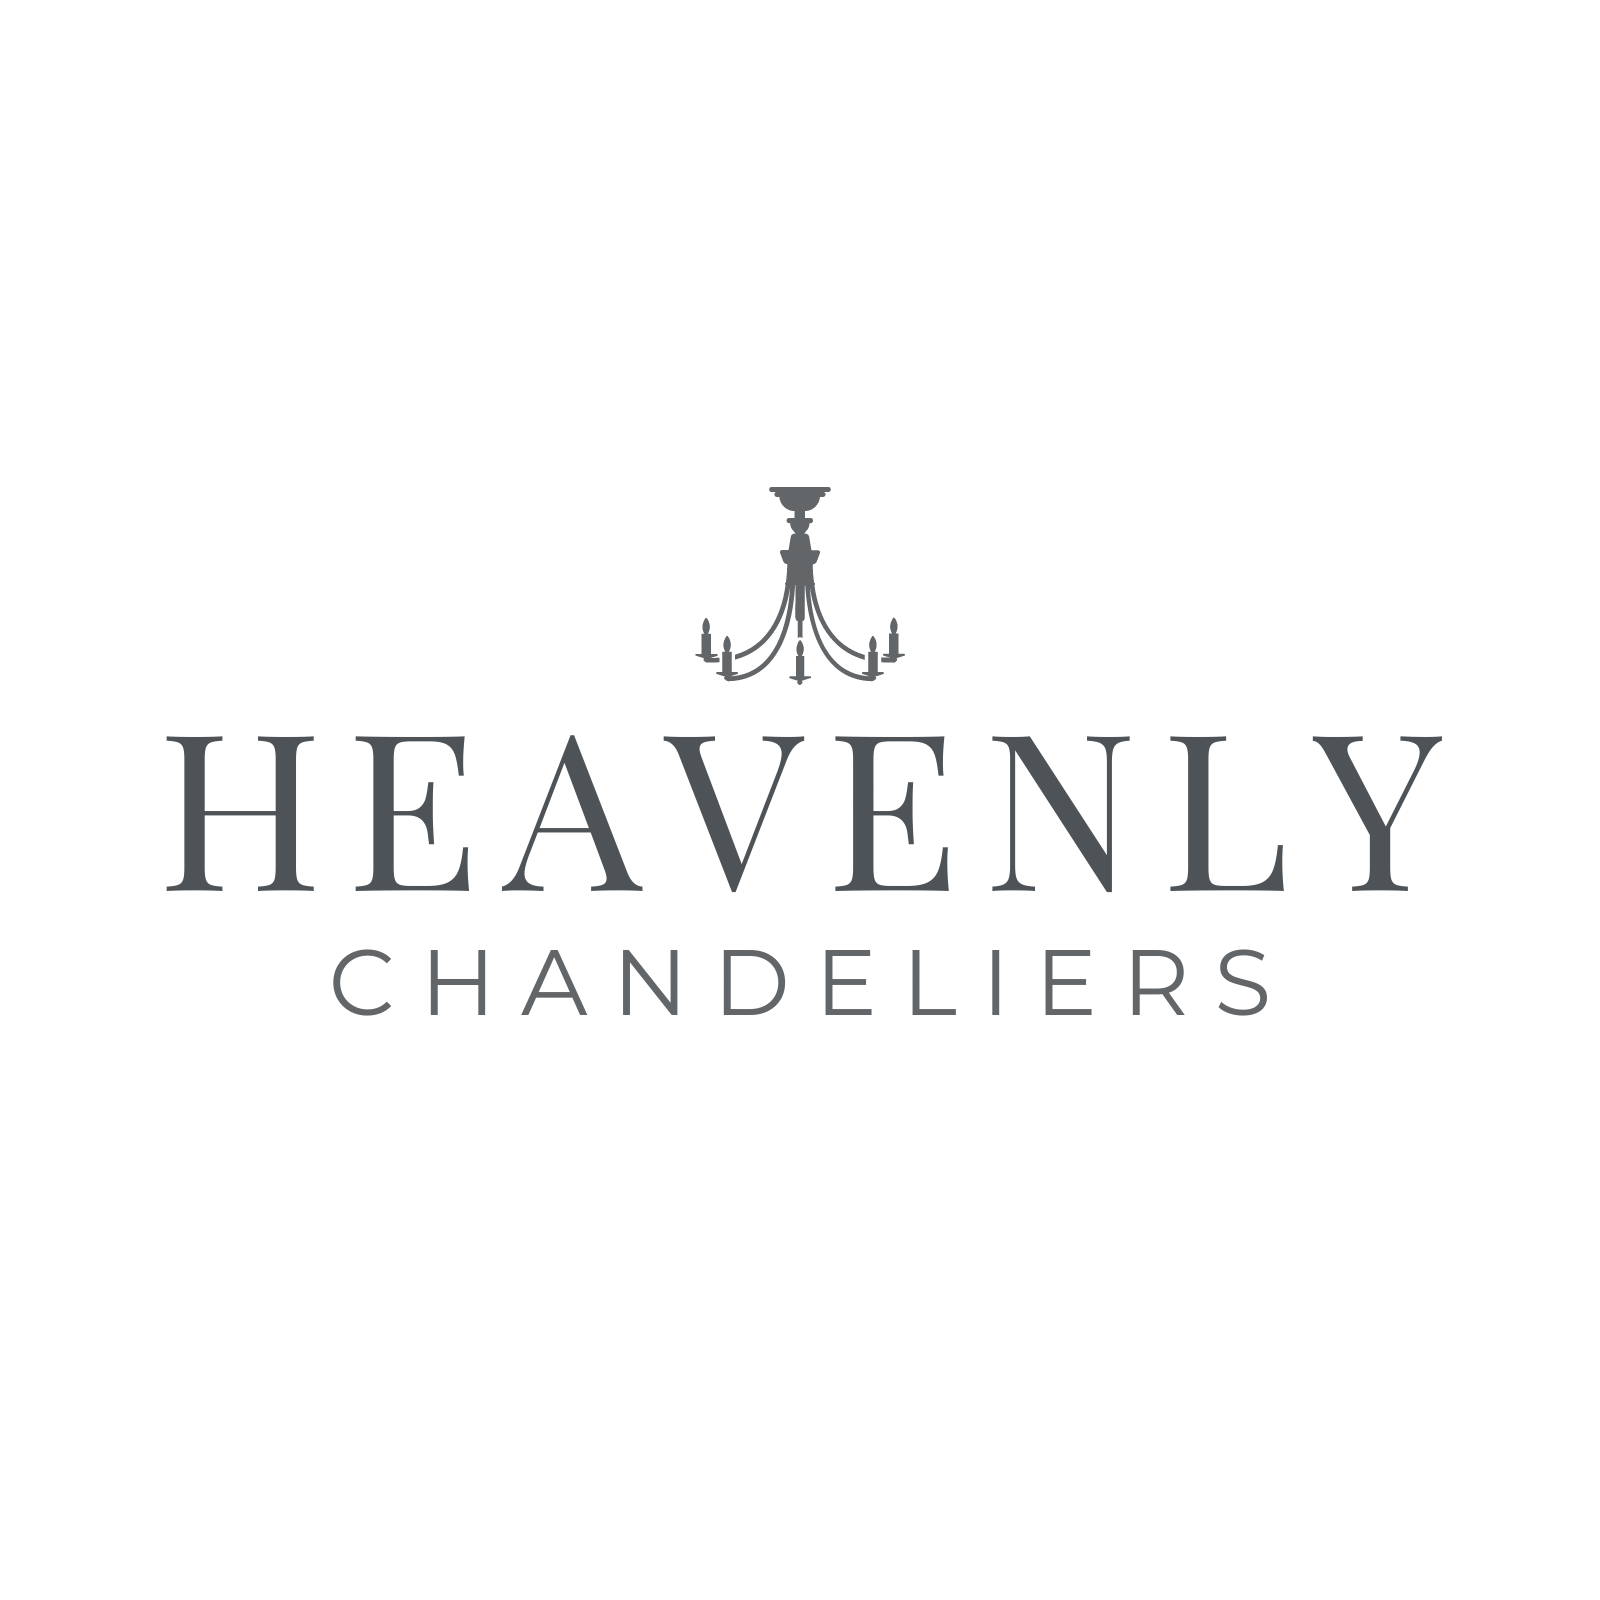 Heavenly Chandeliers